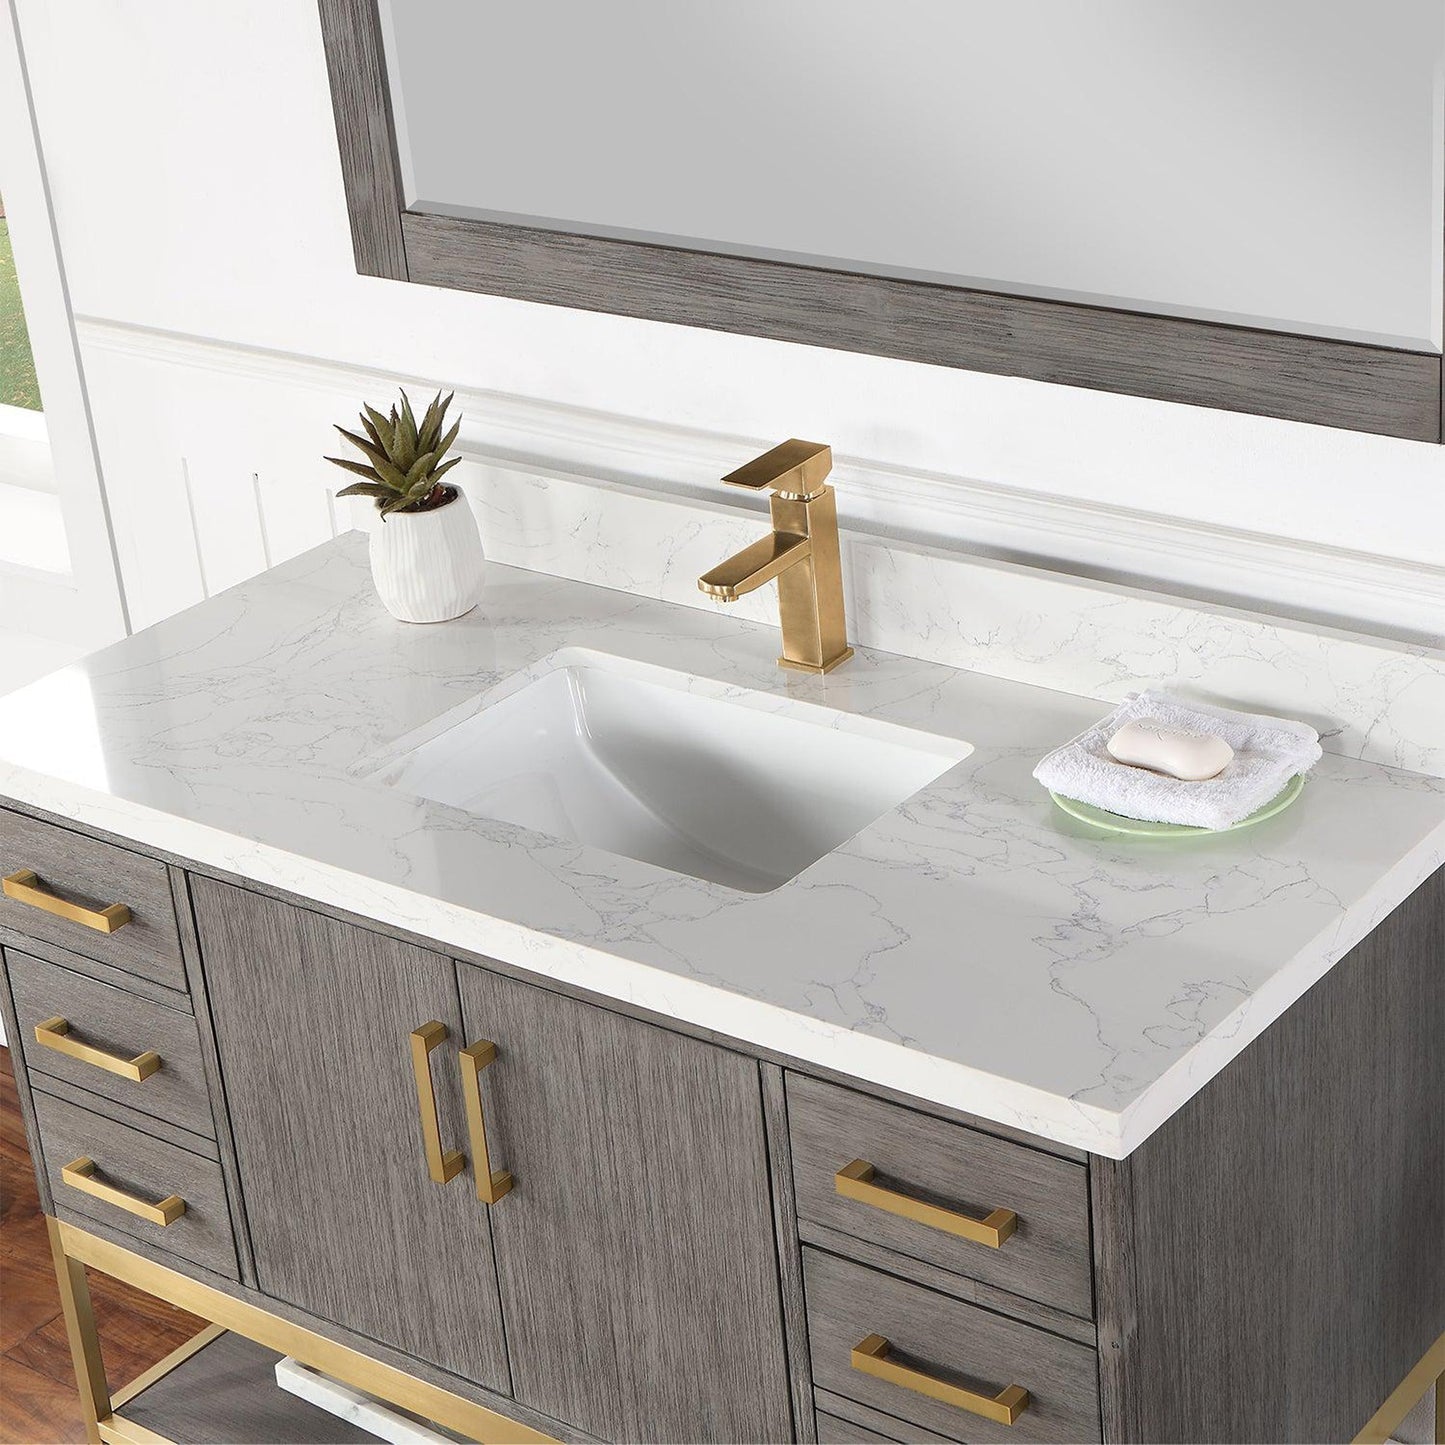 Altair Wildy 48" Classical Grey Freestanding Single Bathroom Vanity Set With Mirror, Stylish Composite Grain White Stone Top, Rectangular Undermount Ceramic Sink, Overflow, and Backsplash